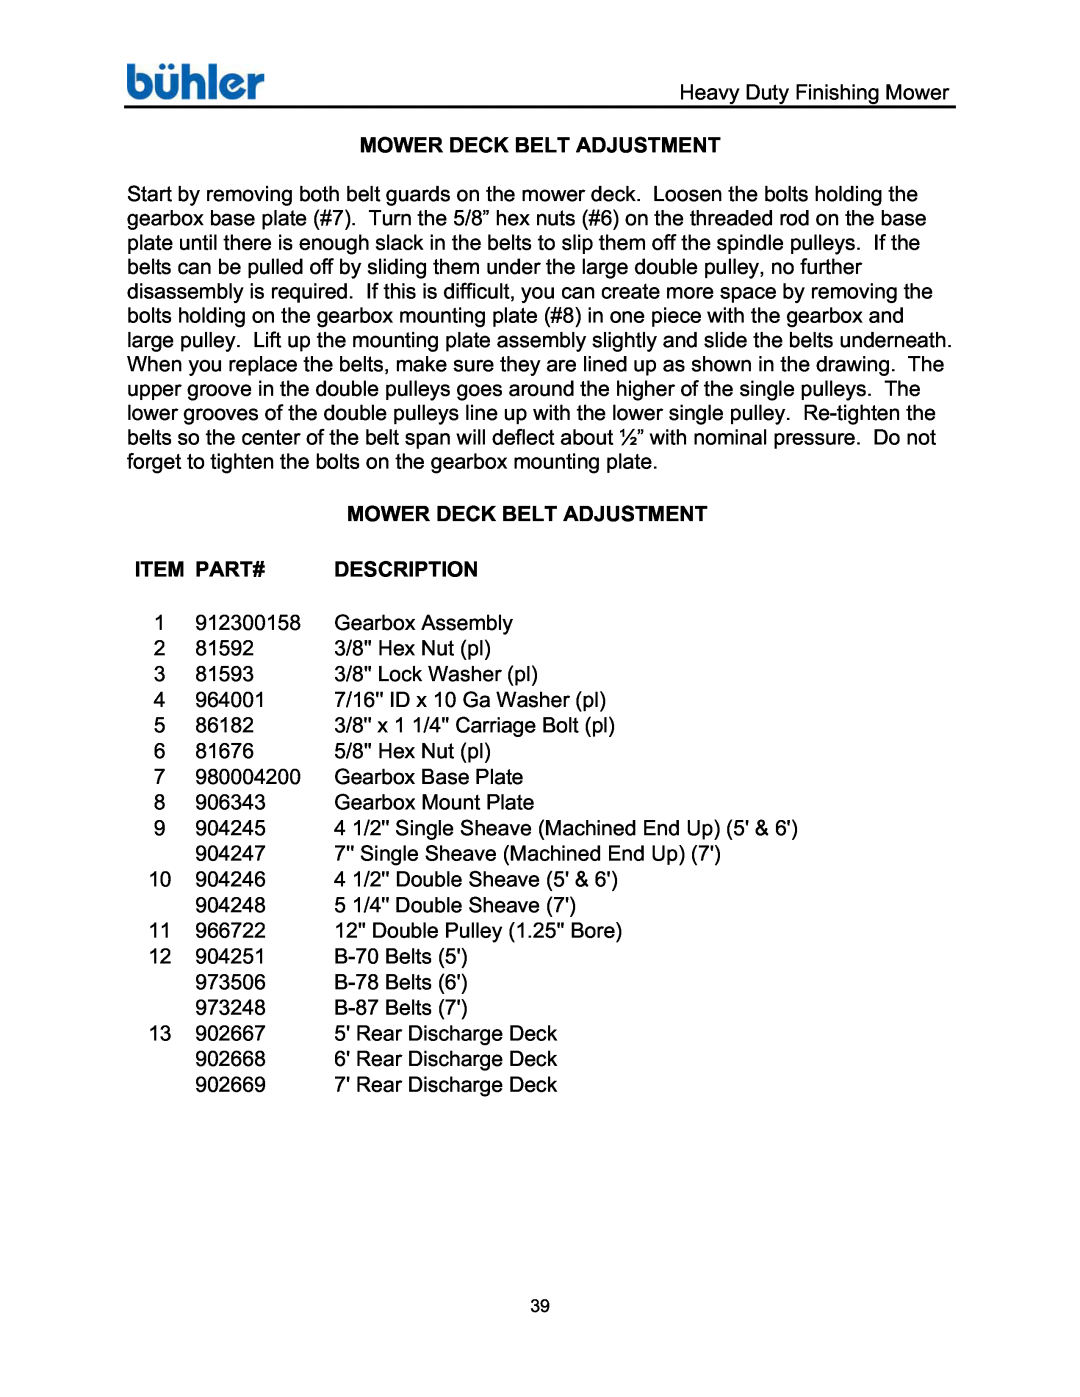 Buhler FK369 manual Mower Deck Belt Adjustment, Item Part#, Description 